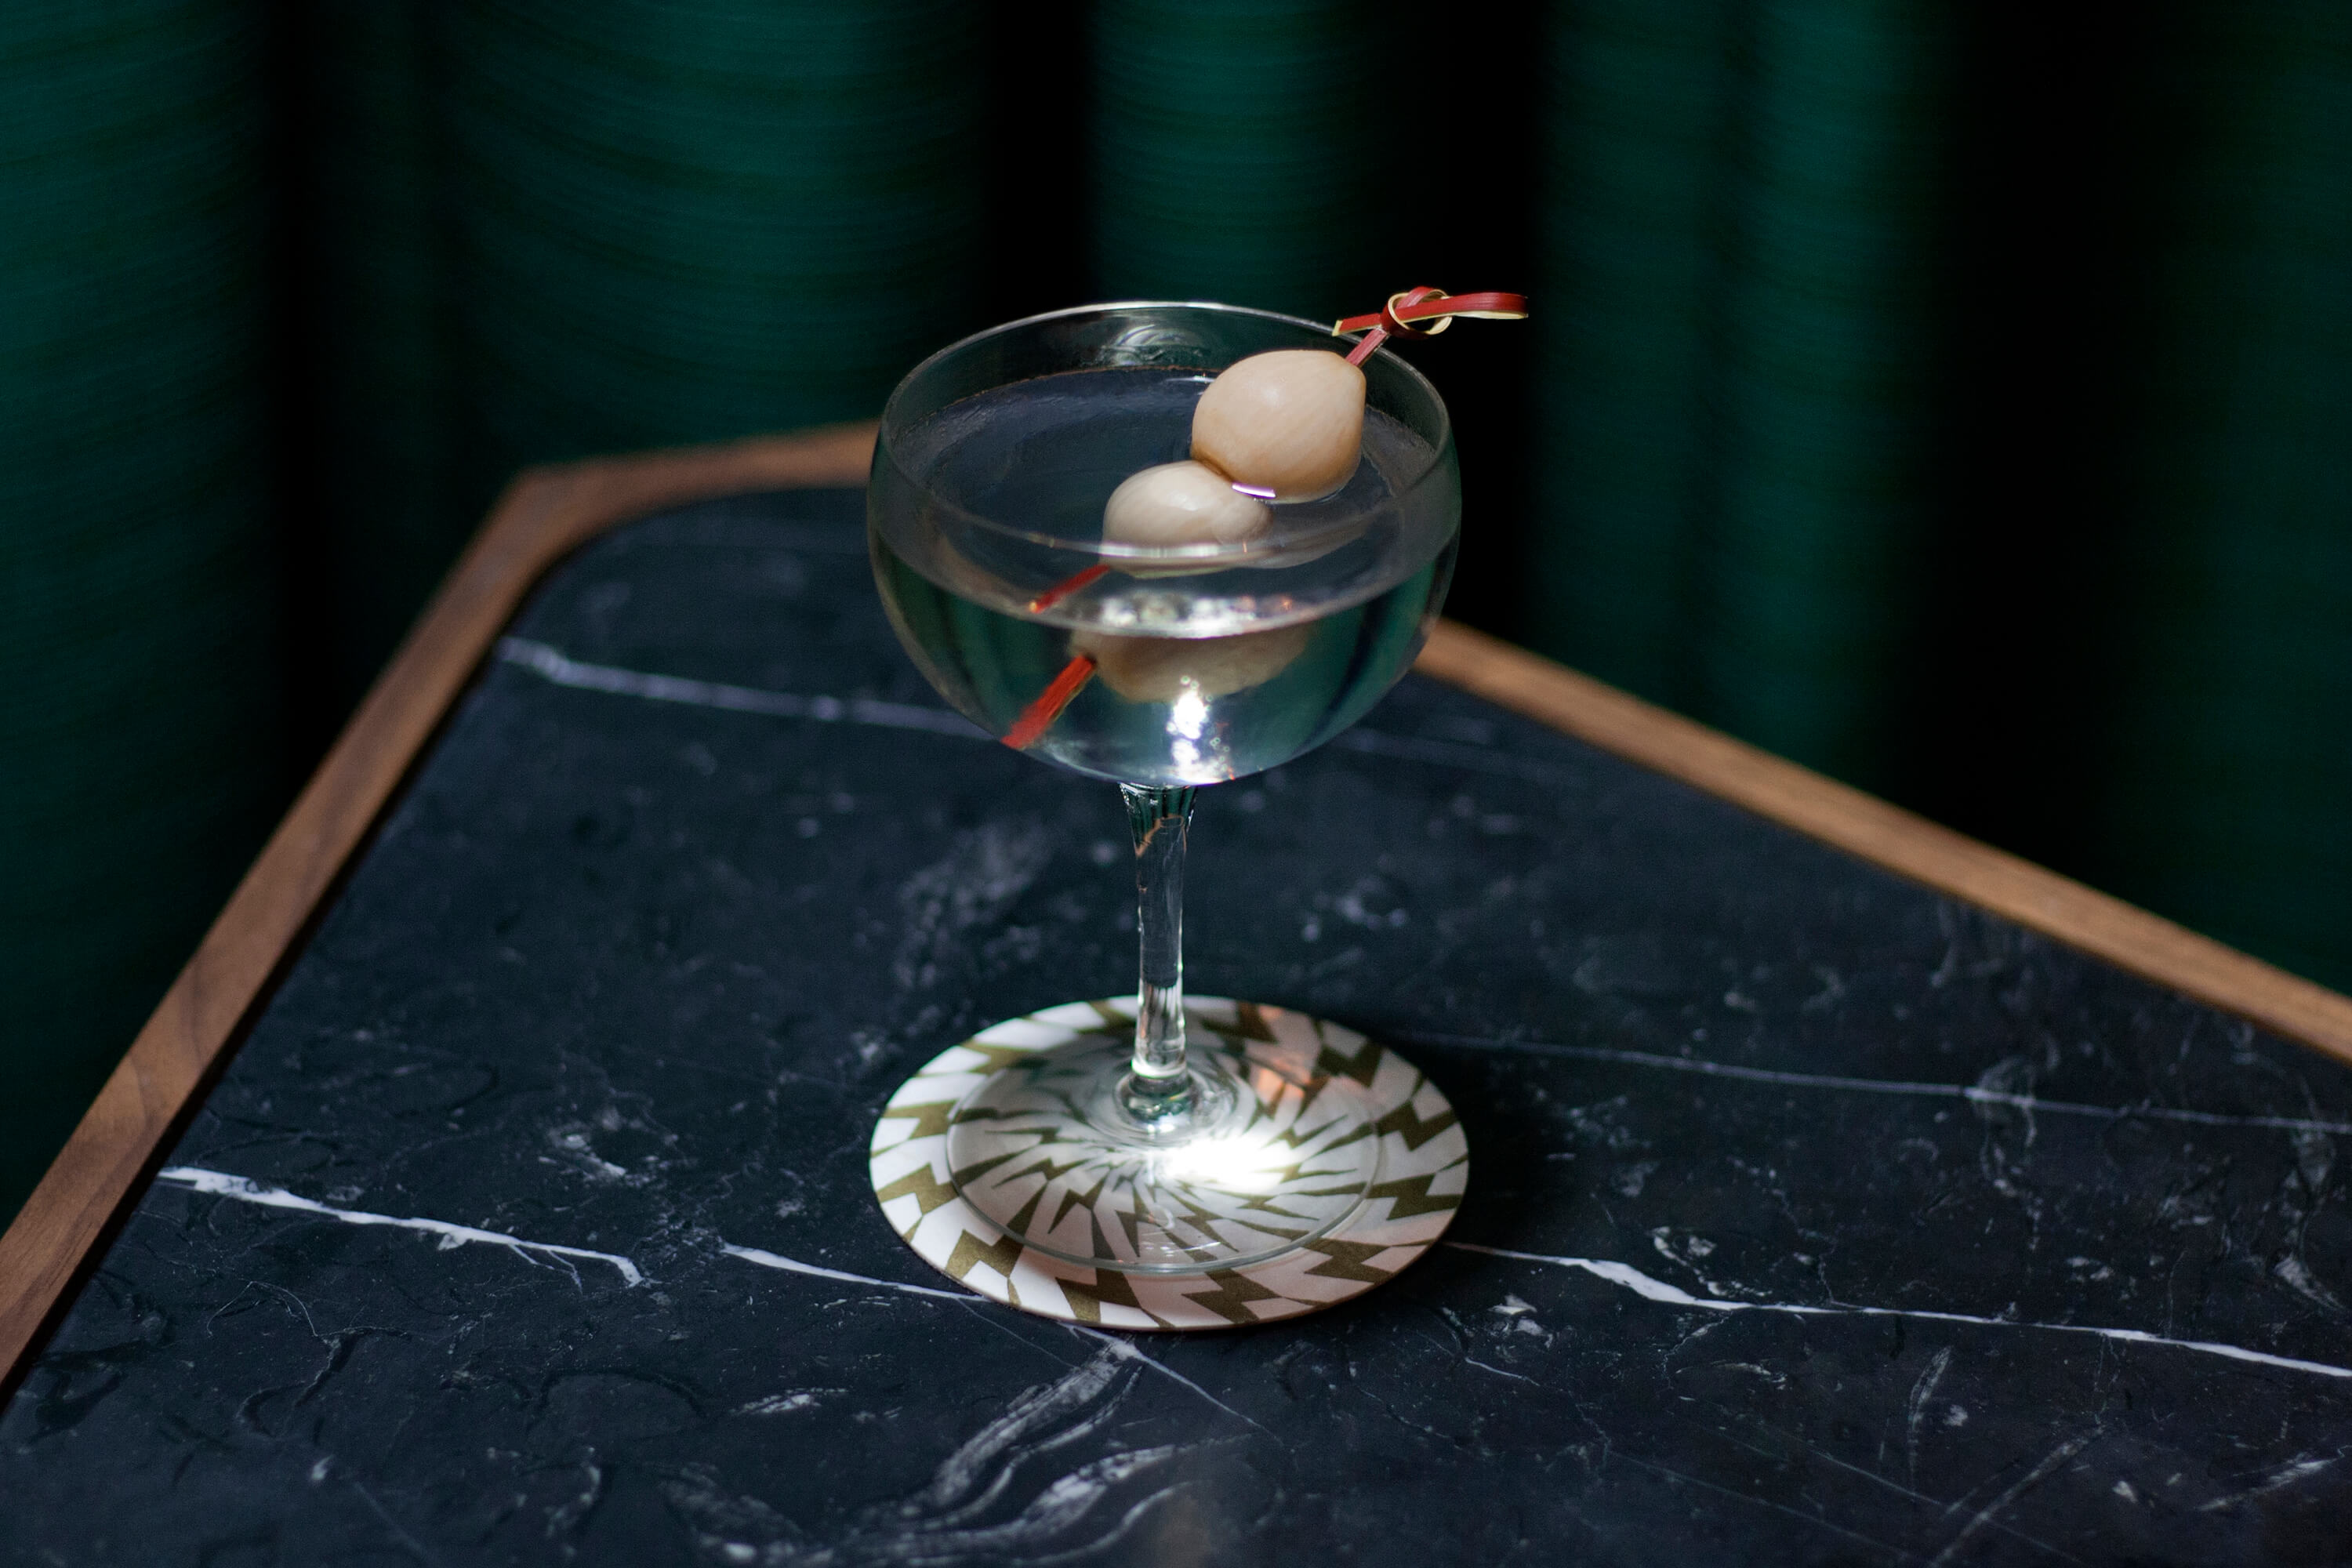 Silvertone cocktail